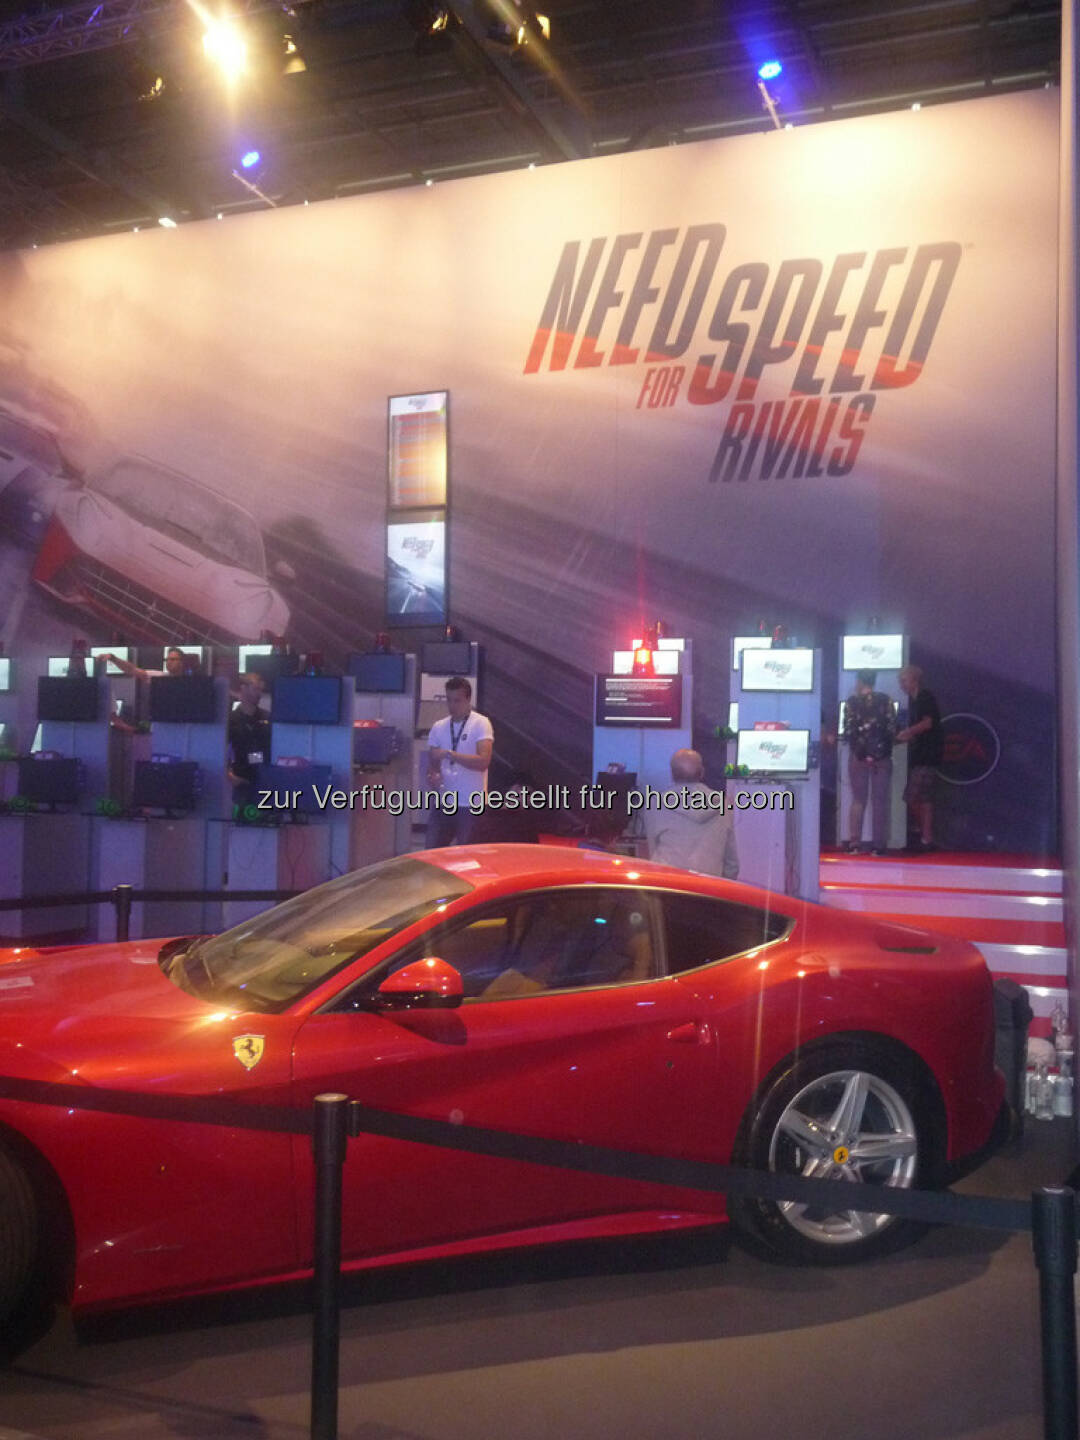 Need for Speed gamescom